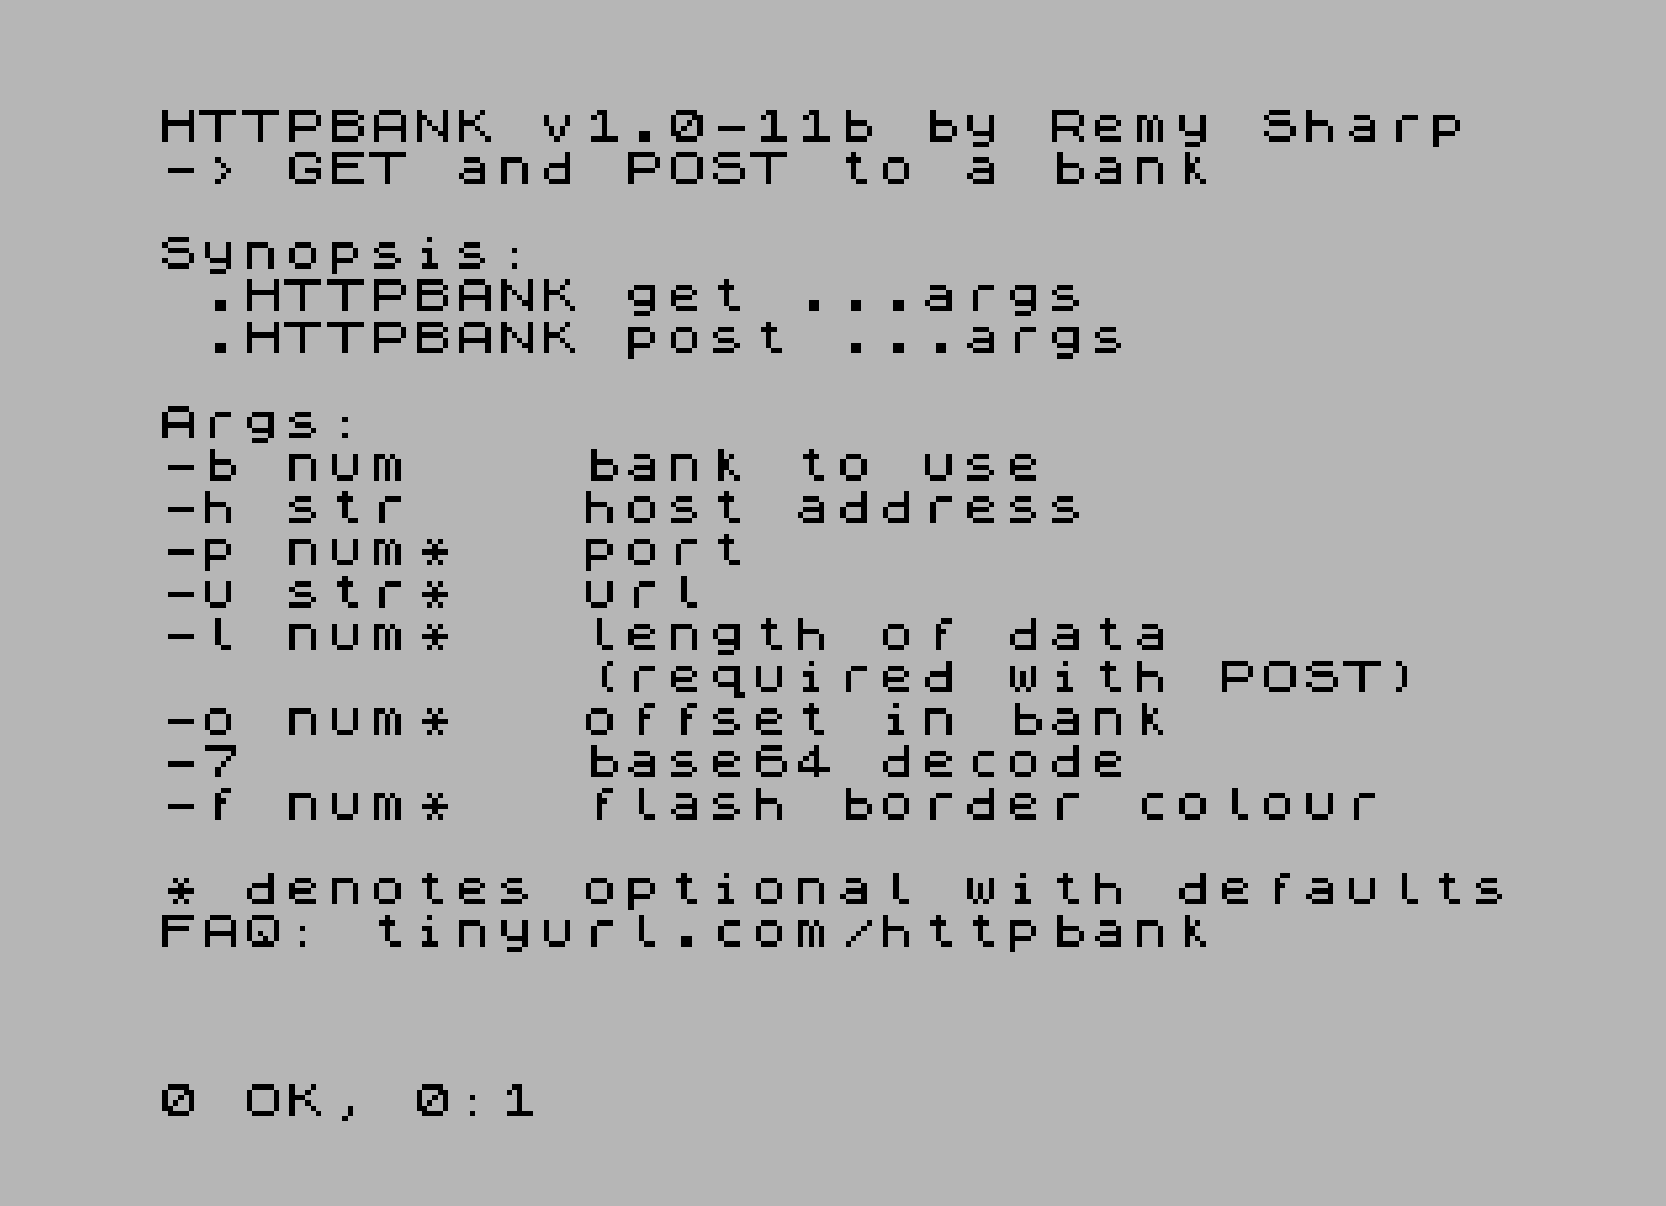 Screenshot of the help screen to httpbank